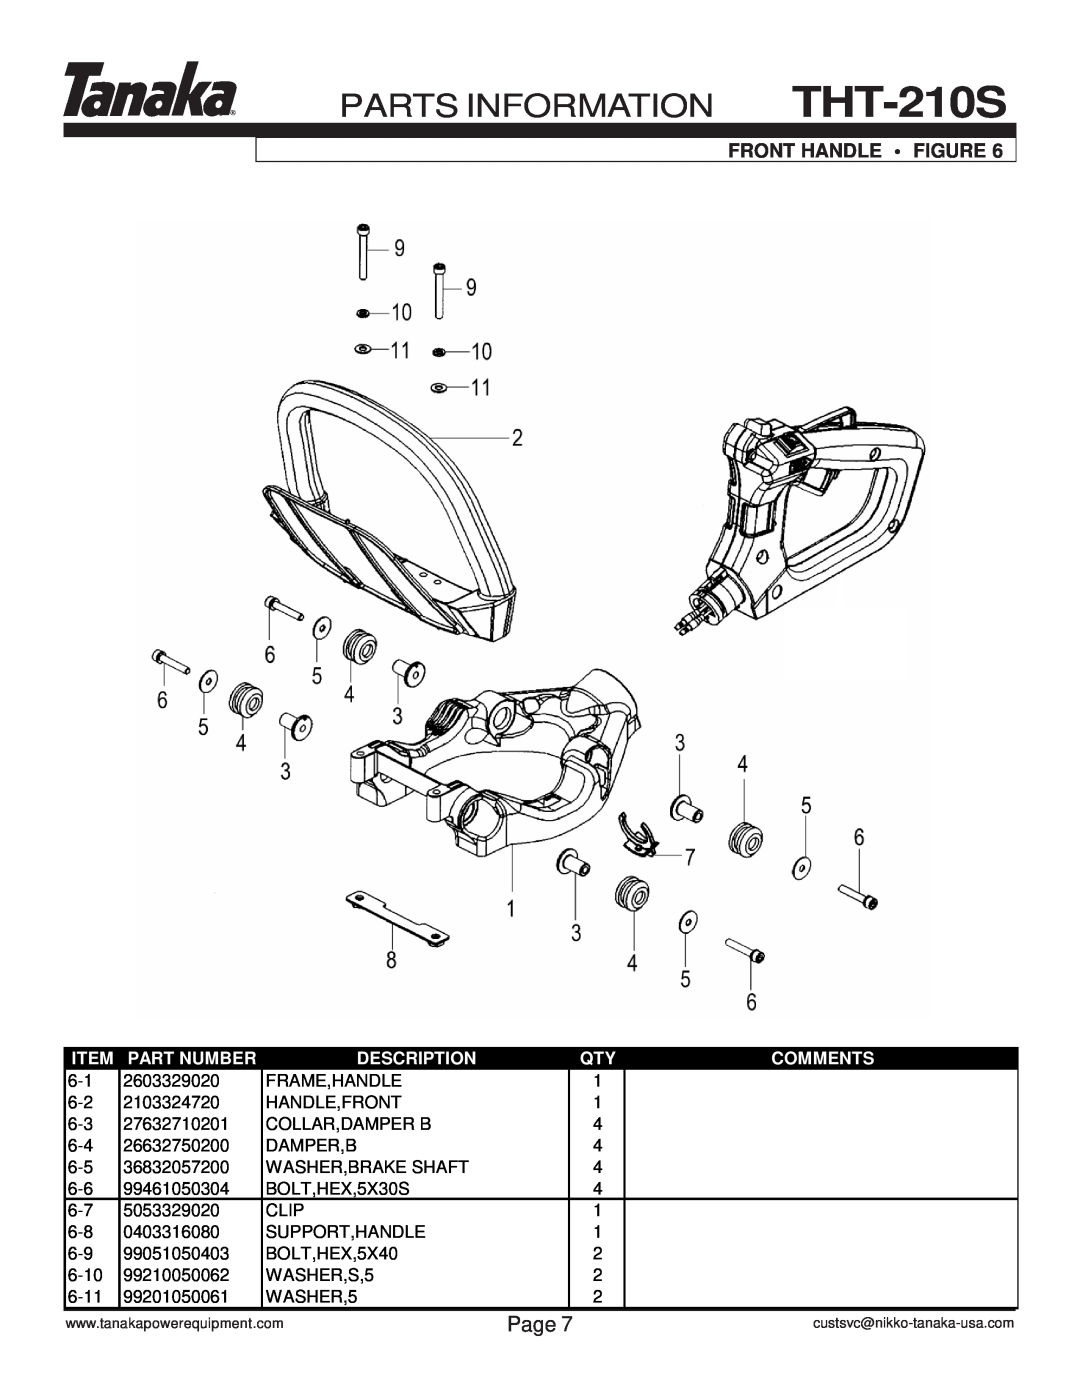 Tanaka manual Front Handle • Figure, PARTS INFORMATION THT-210S, Page, Item, Part Number, Description, Comments 